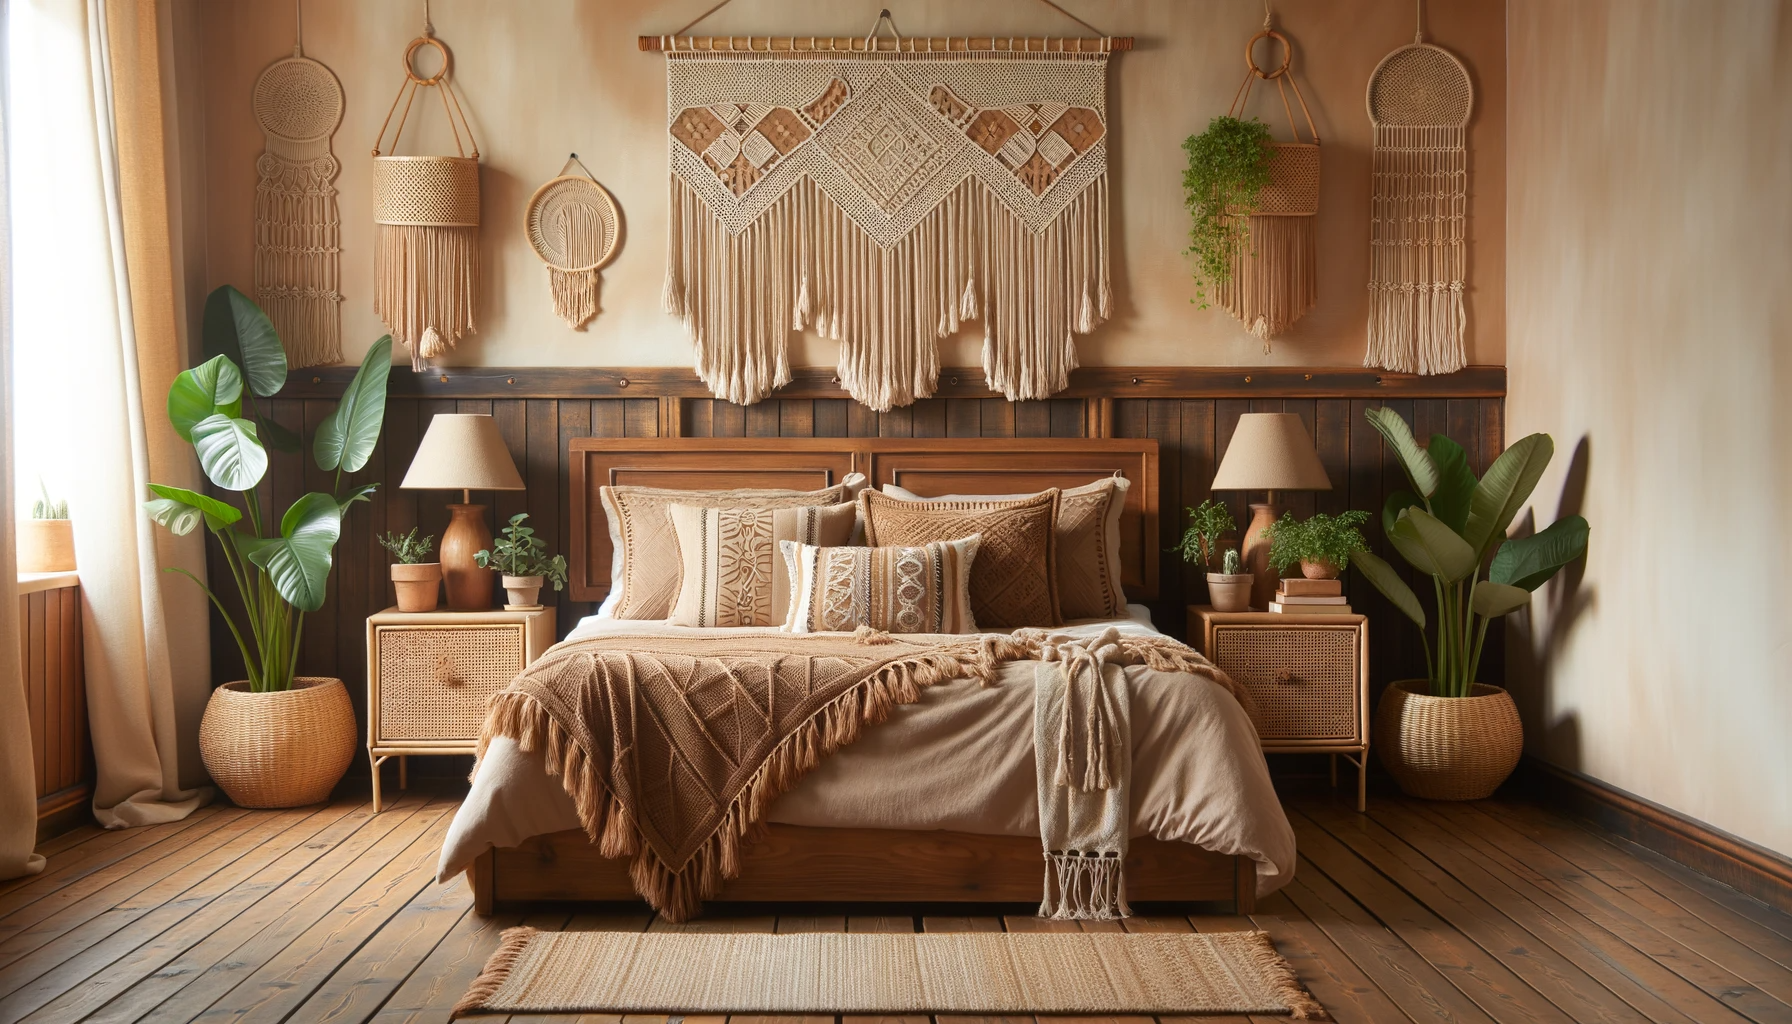 bohemian bedroom with wood headboard, wood flooring, and rattan furniture